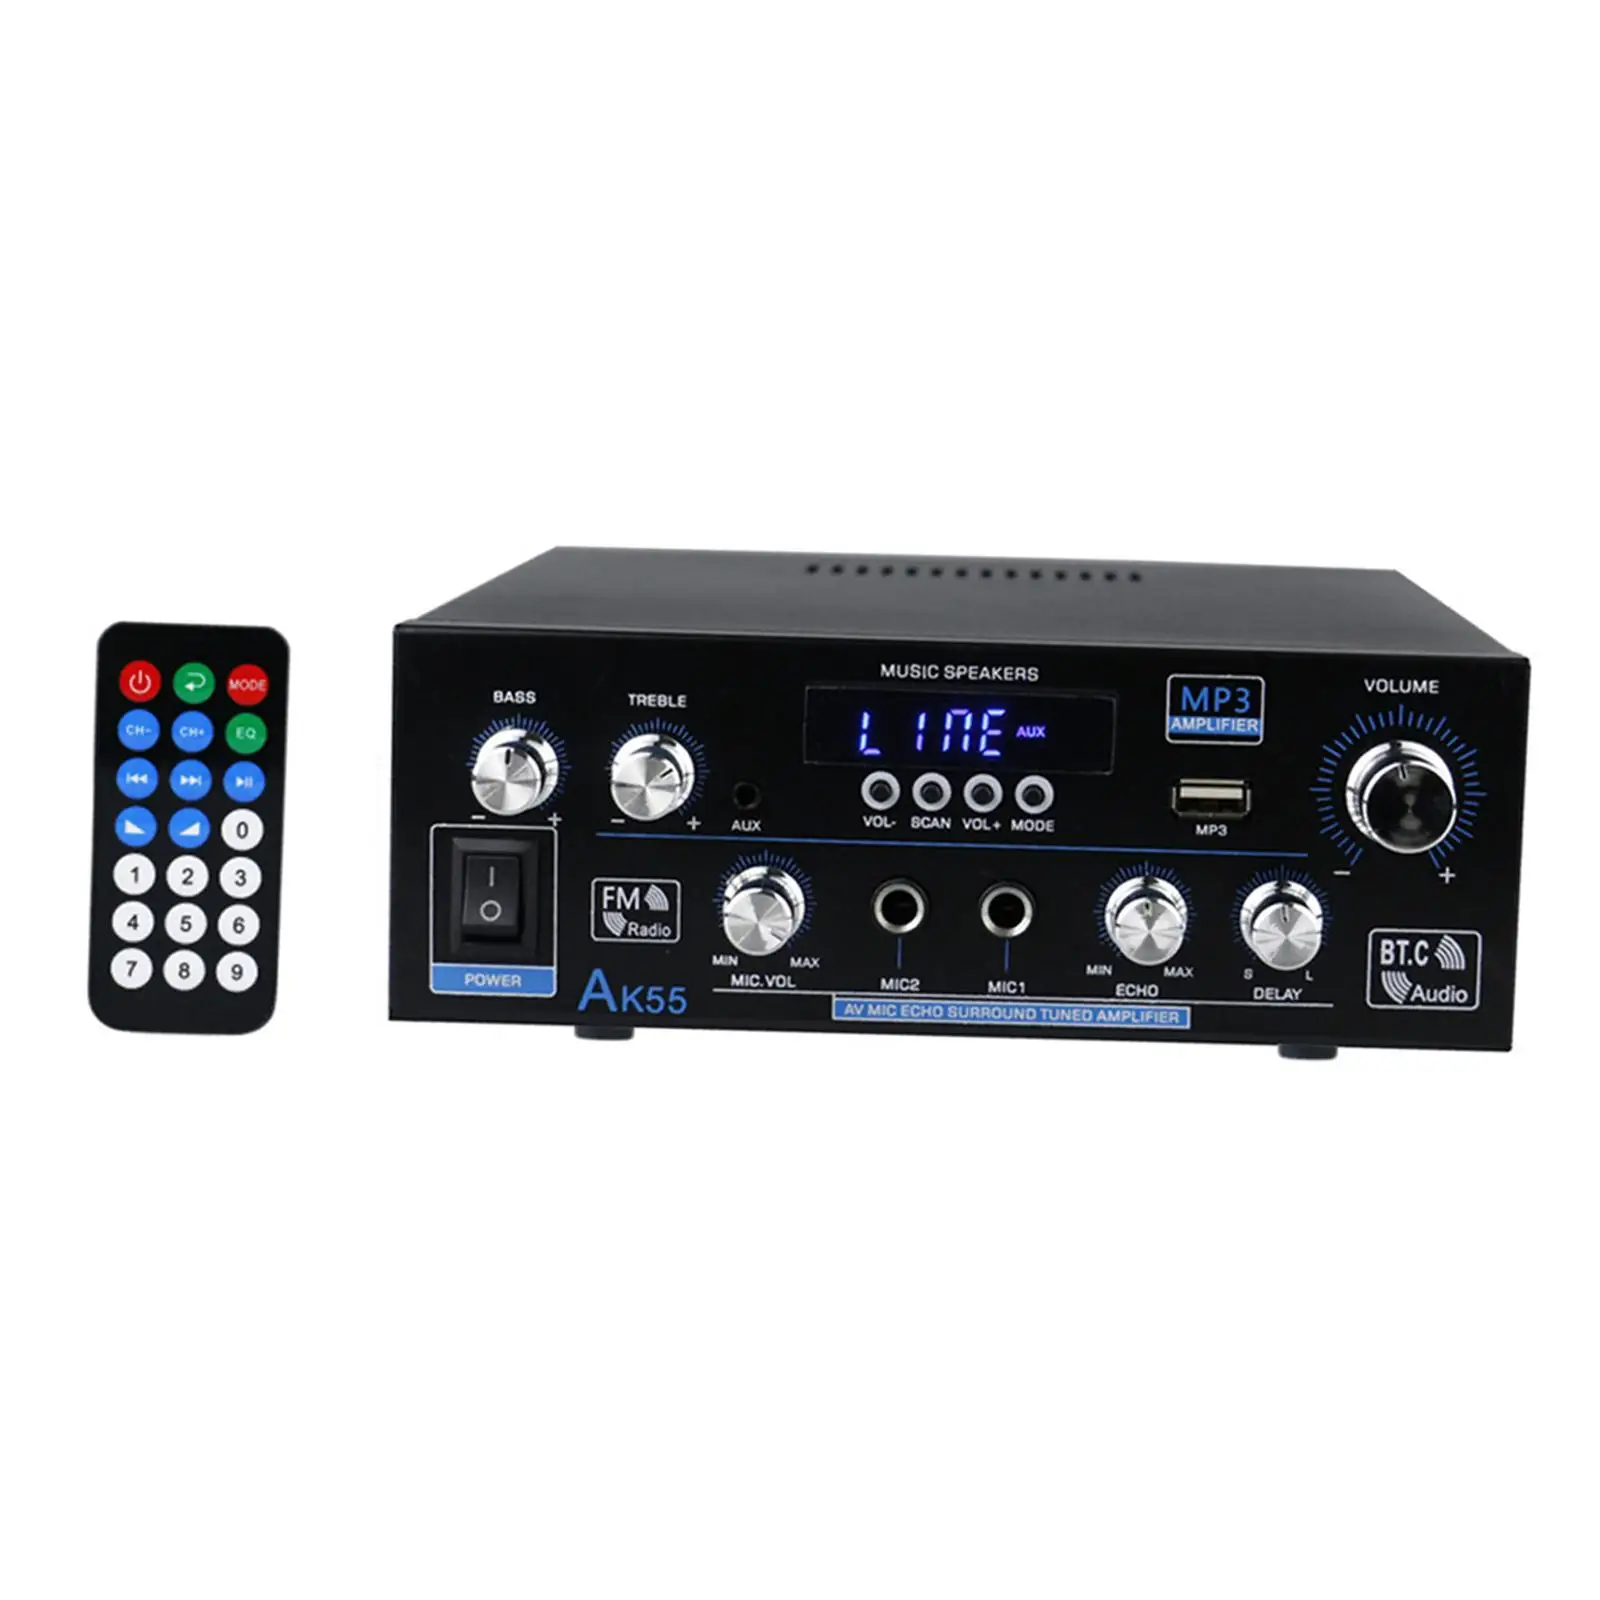 Digital Power Amplifier 110-240V 2.0 CH Echo Reverb Delay for Car Home Bar Party HiFi Stereo Amp Speaker Receiver European